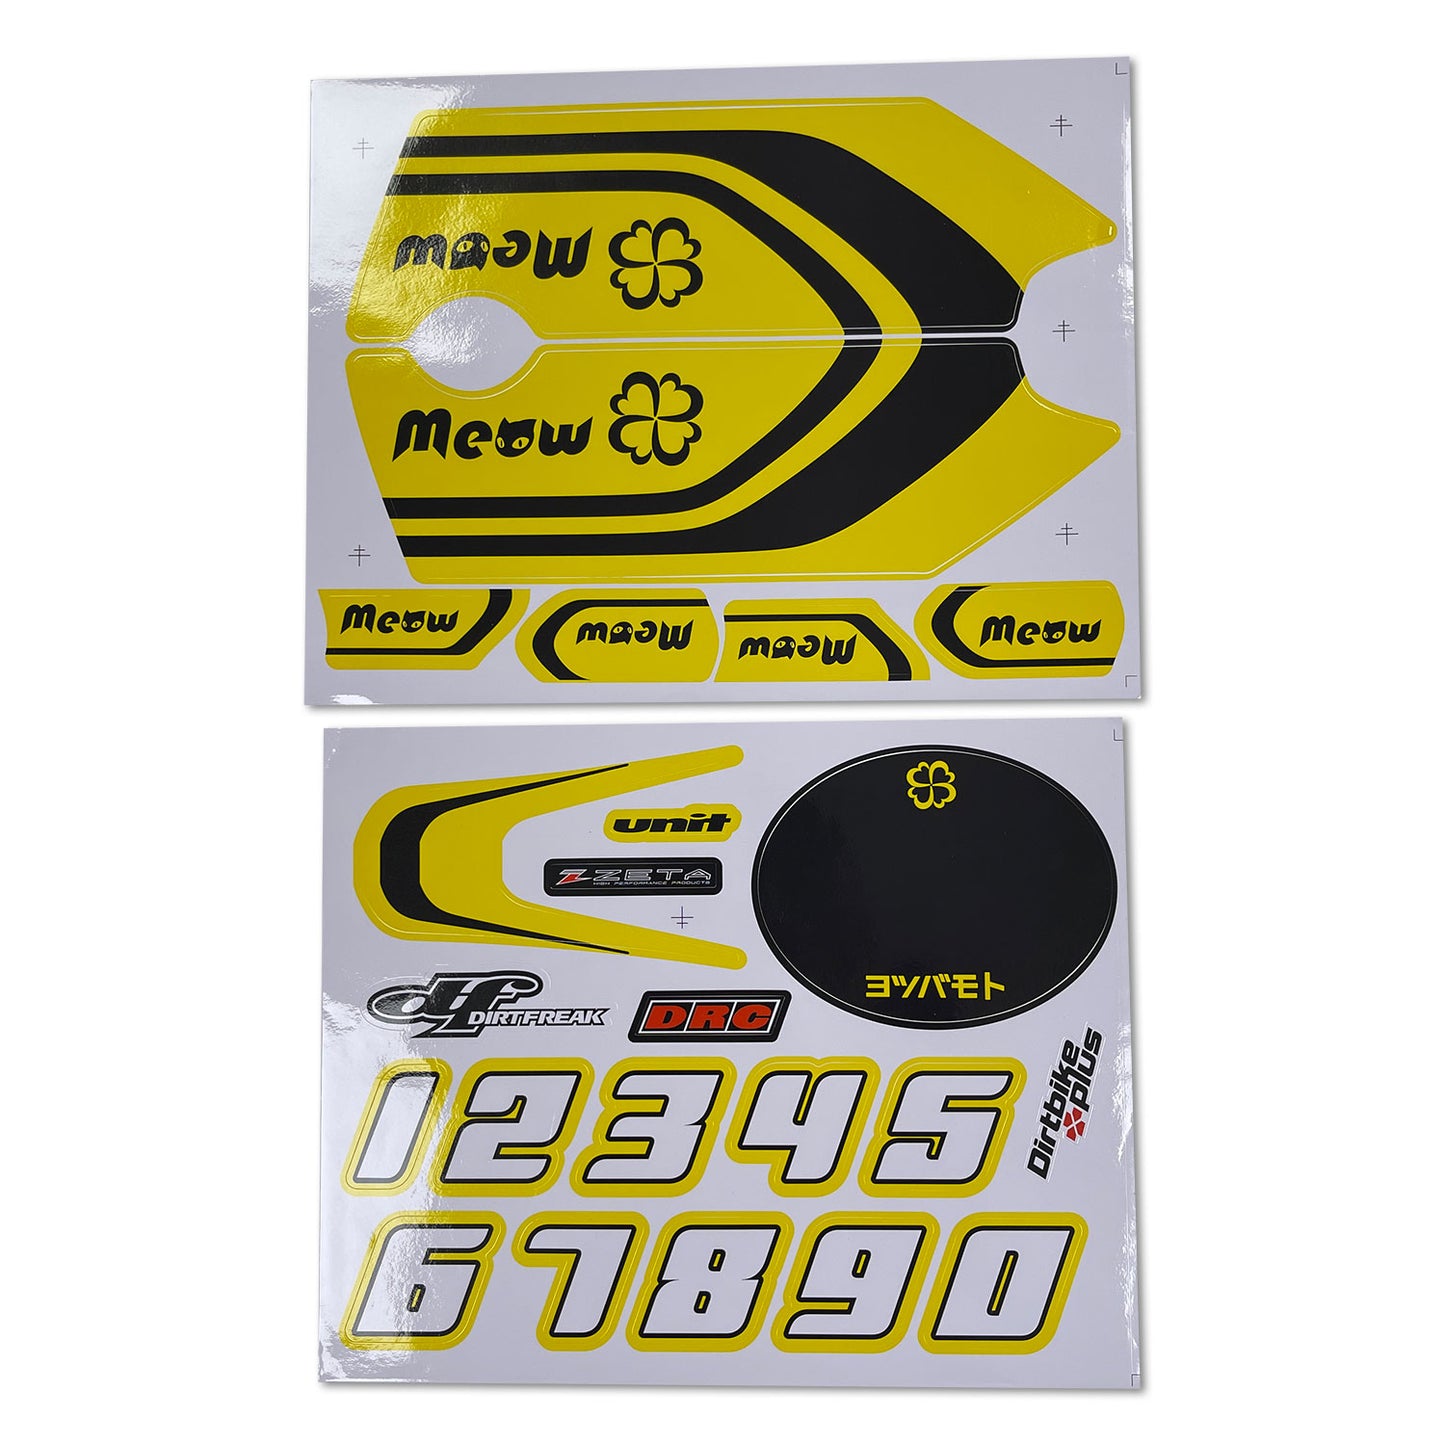 Yotsuba Meow Yellow Stickers Kit